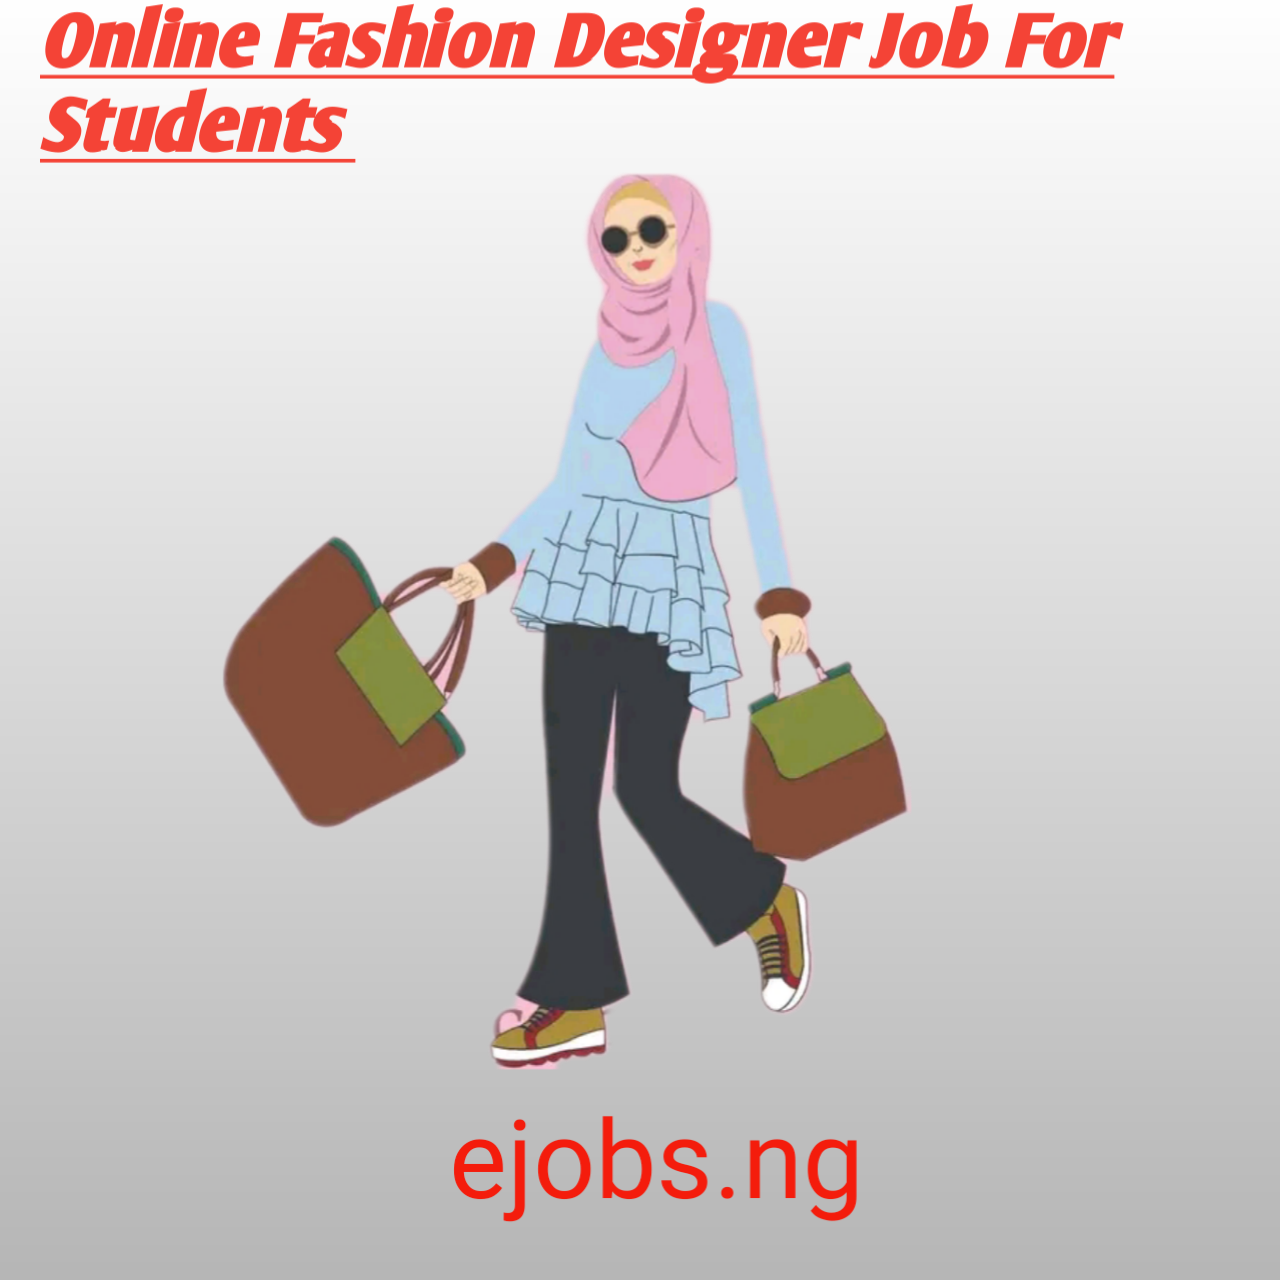 Online fashion designer jobs for students, online Fashion design jobs for students